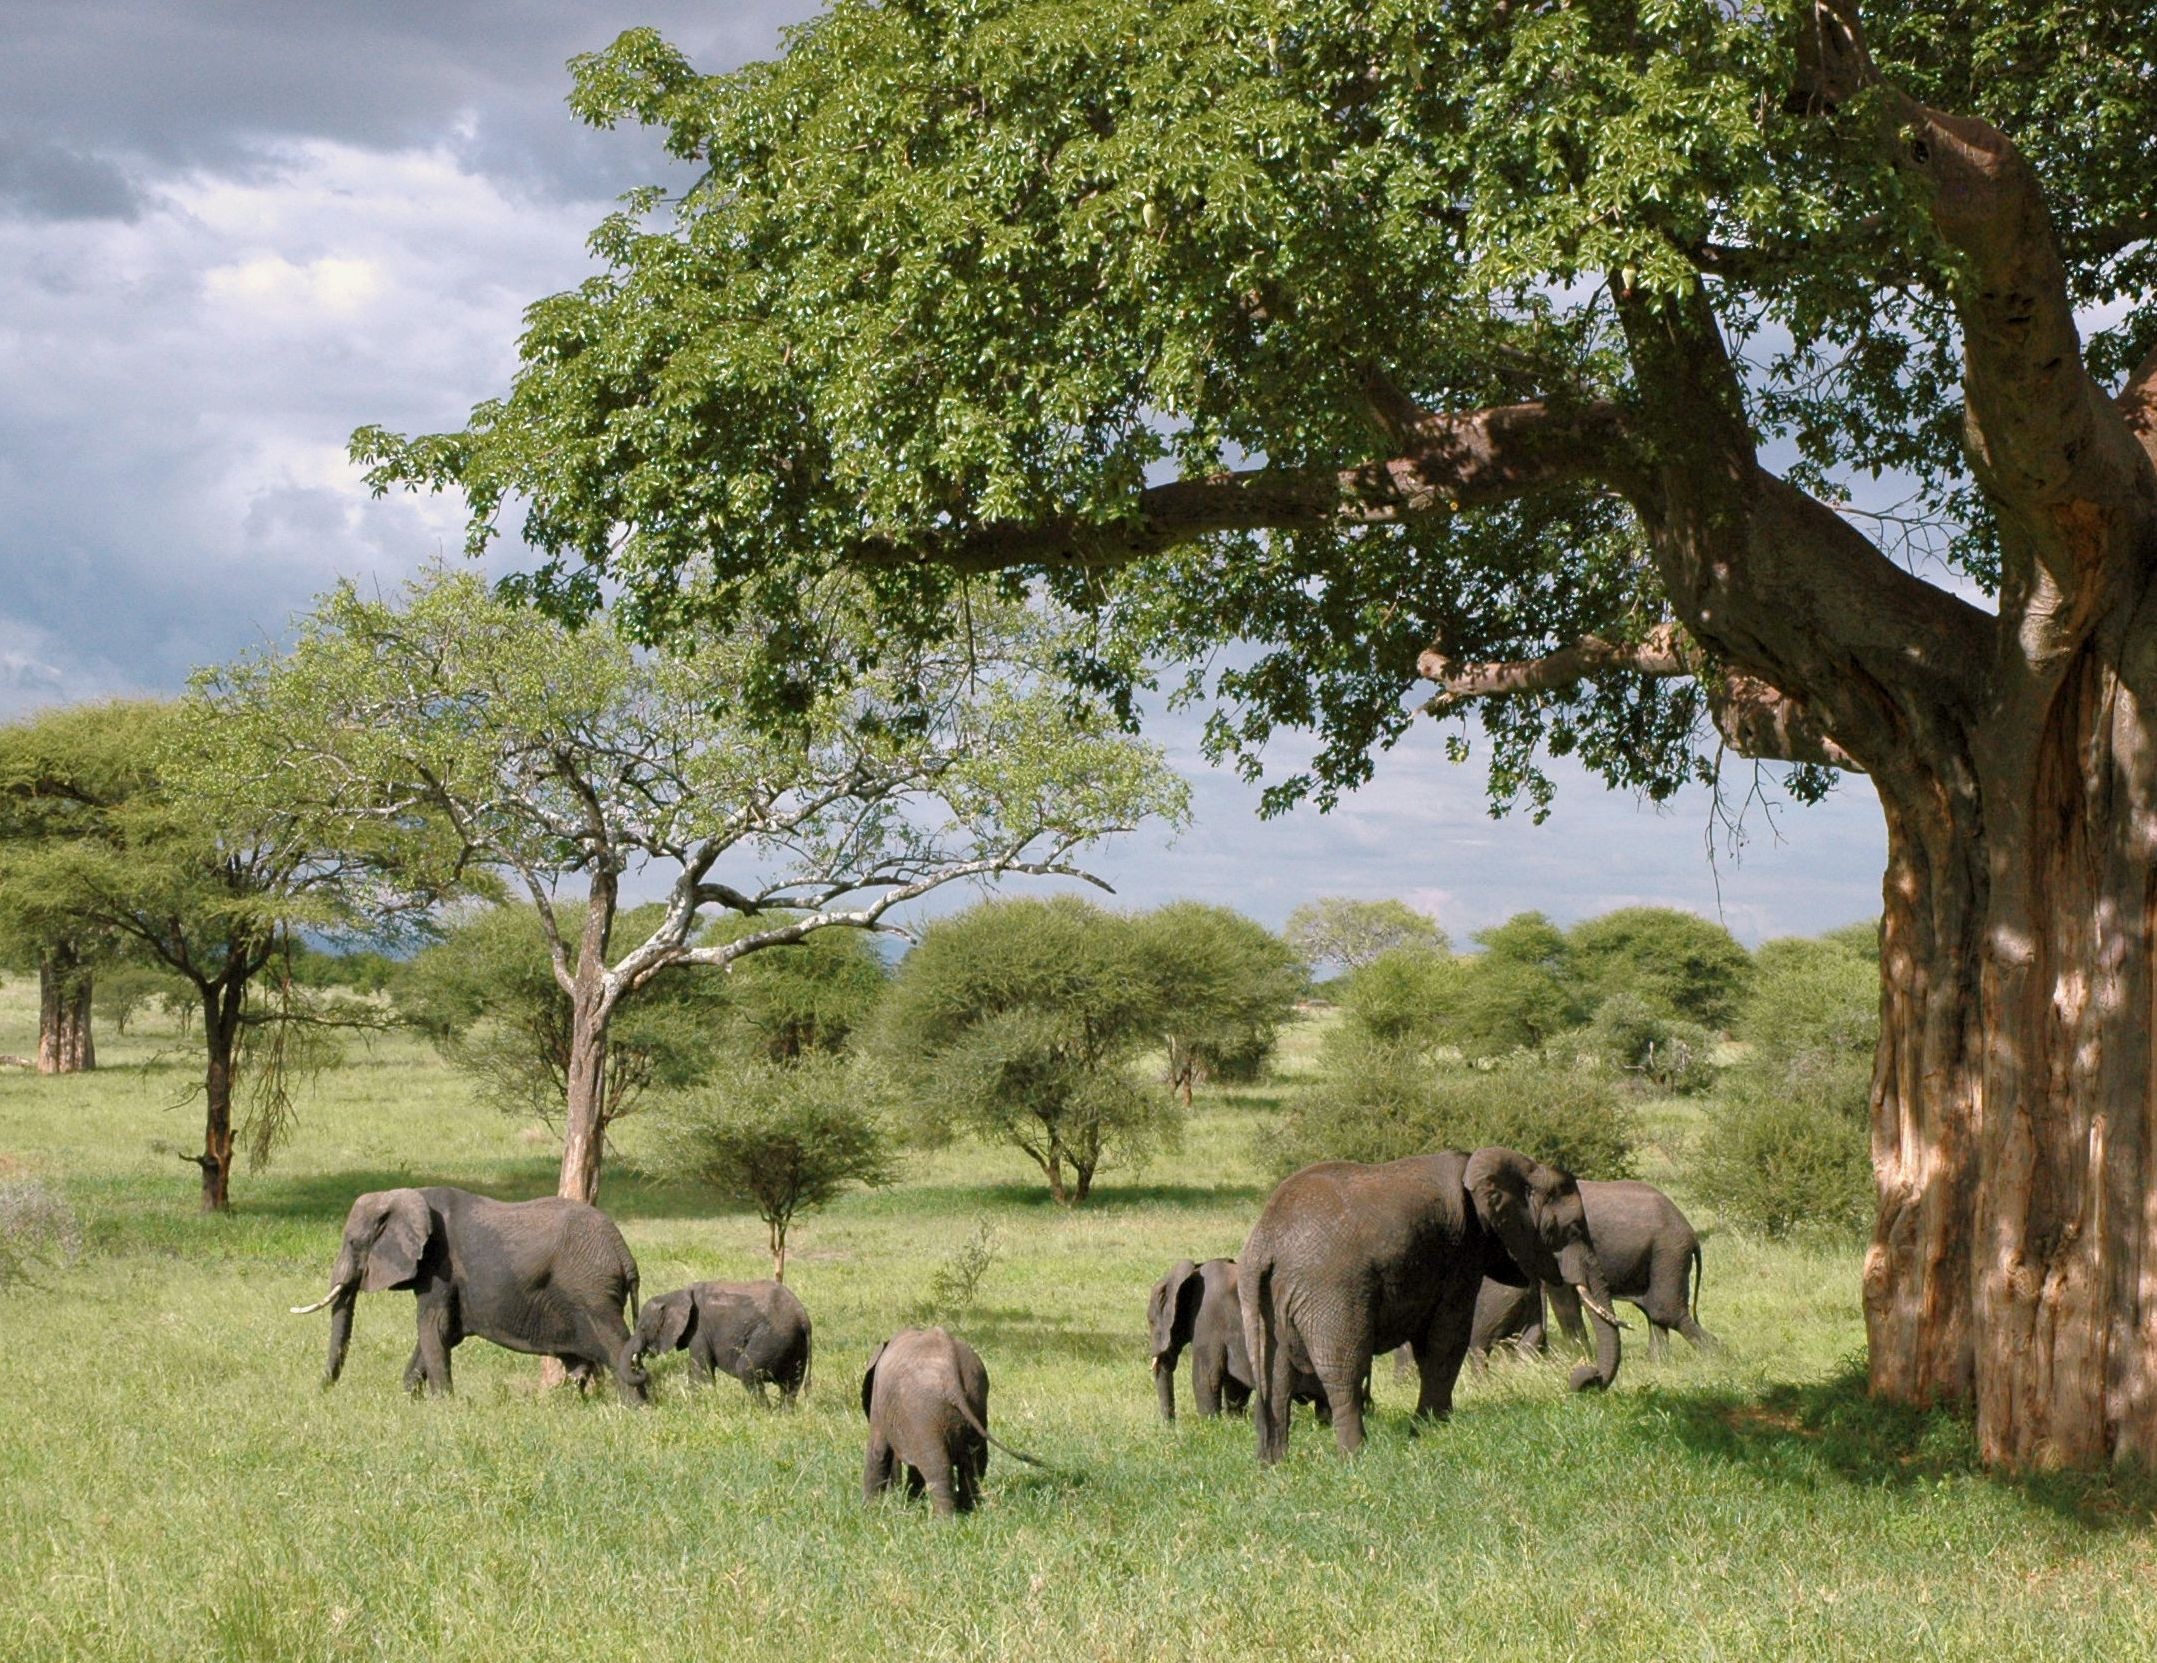 Elephants walking on the warm savannah.